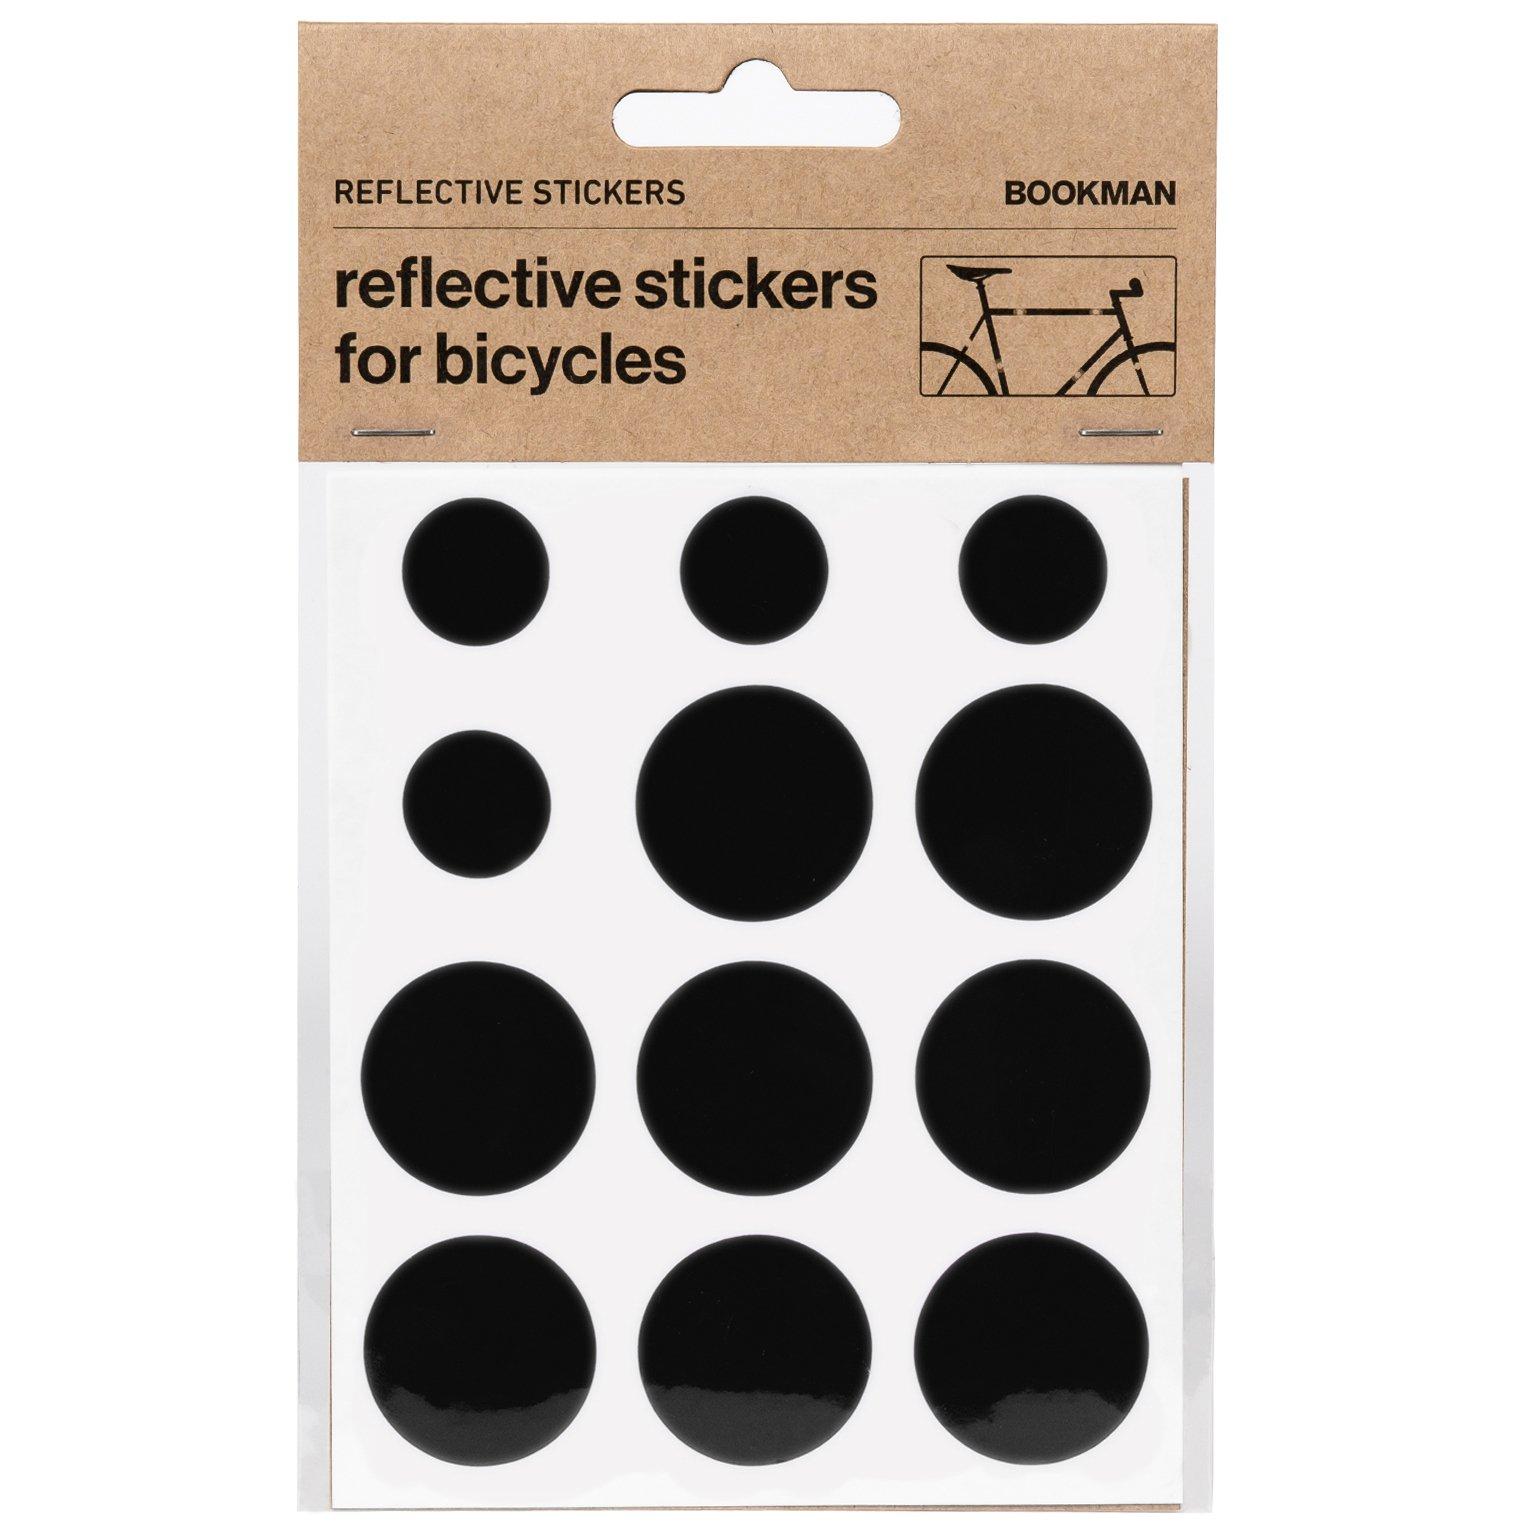 Bookman Reflective Stickers - Black